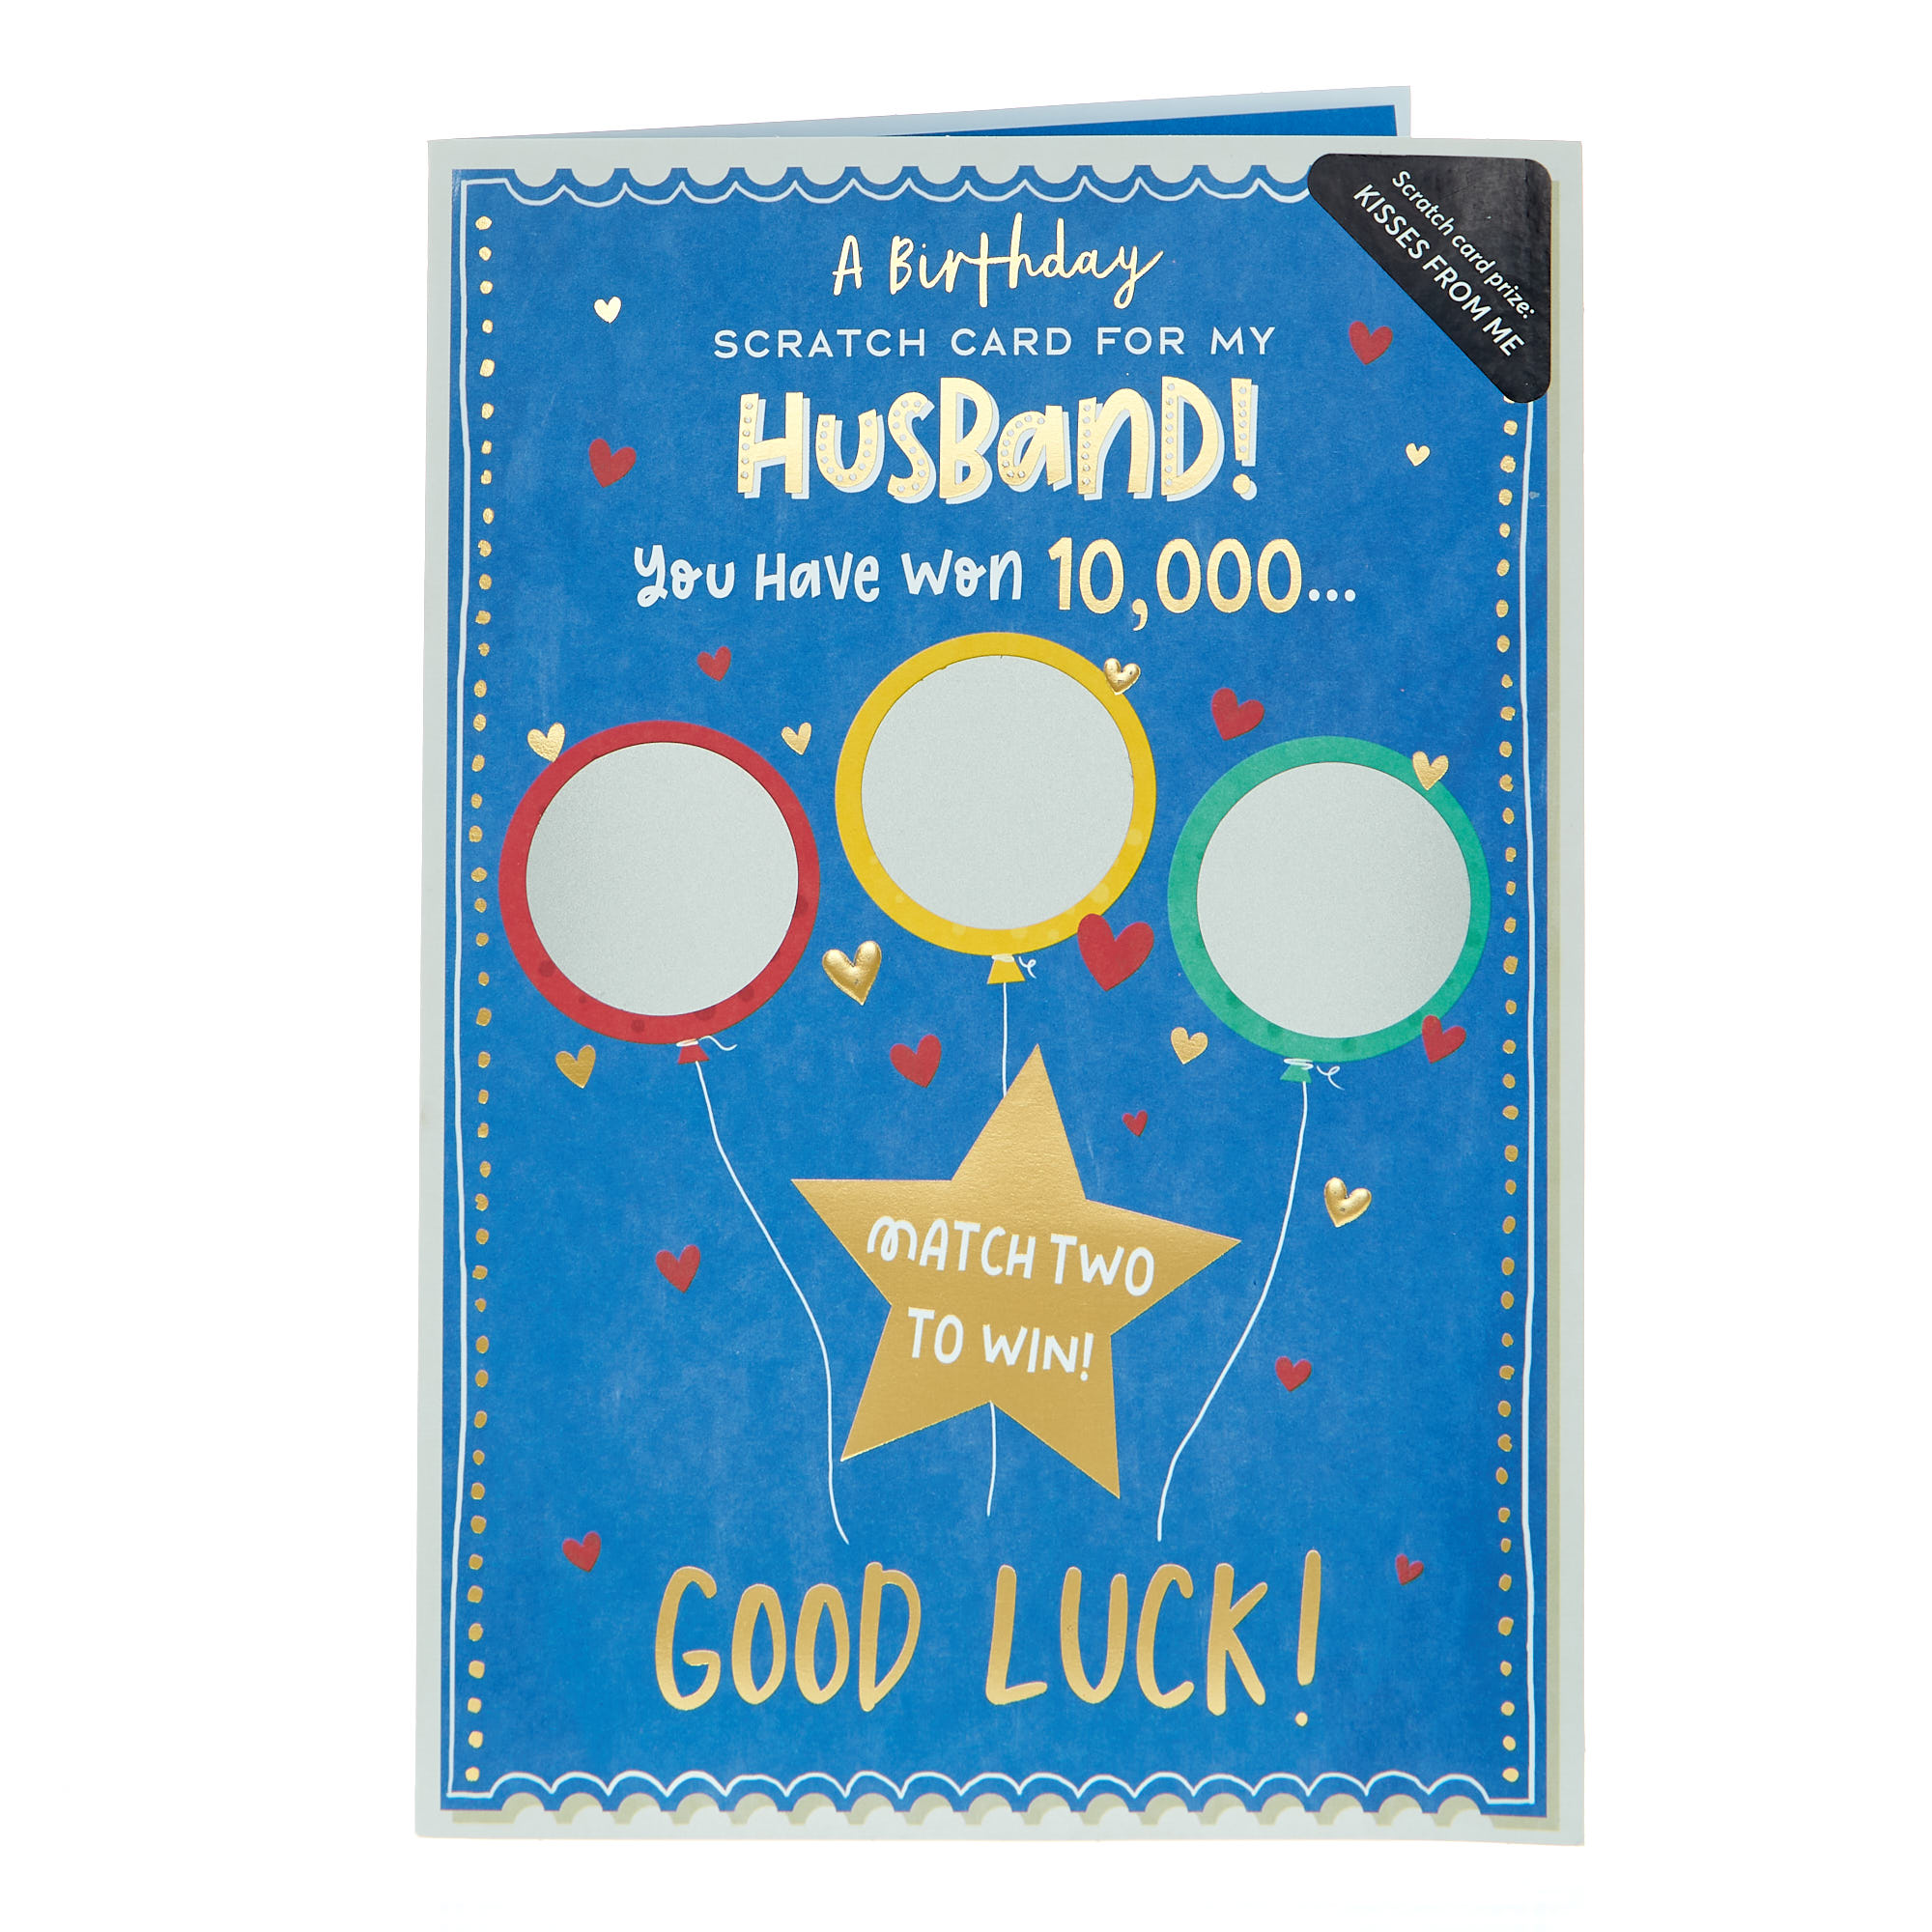 Husband Match Two Scratch Off Birthday Card